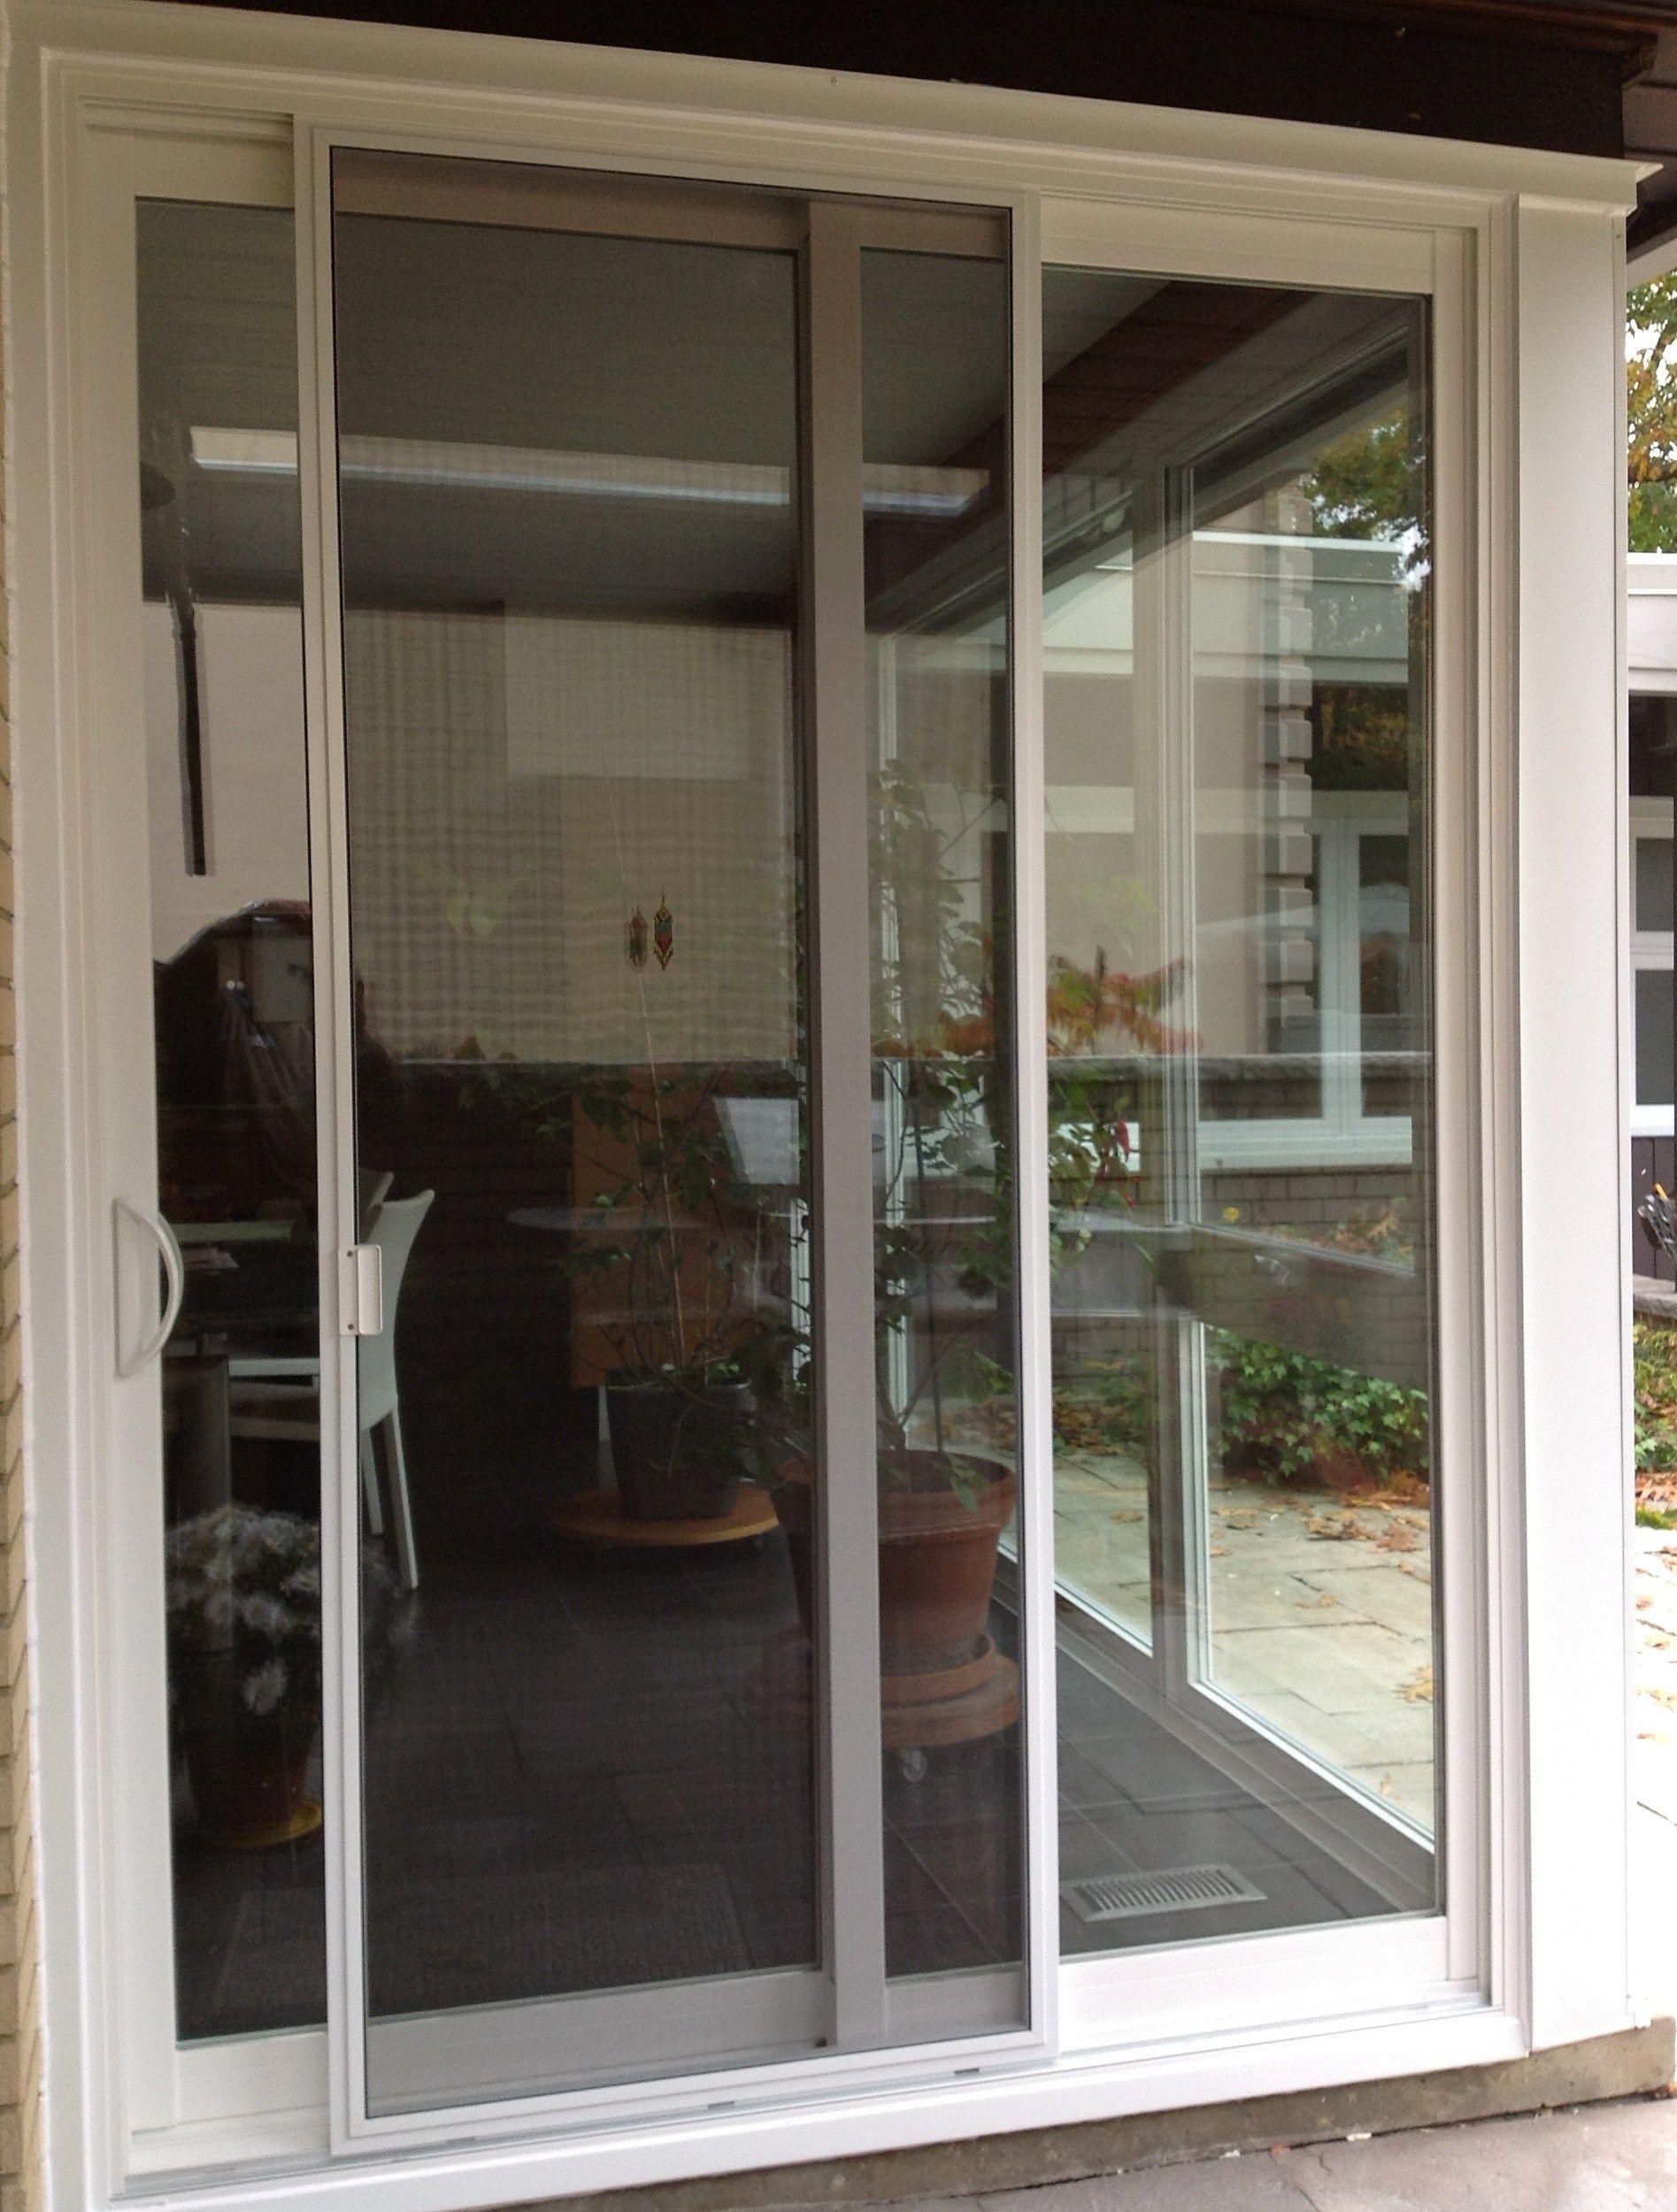 Best Of Door Handles For Sliding Glass Doors Home Decor throughout size 1895 X 2500